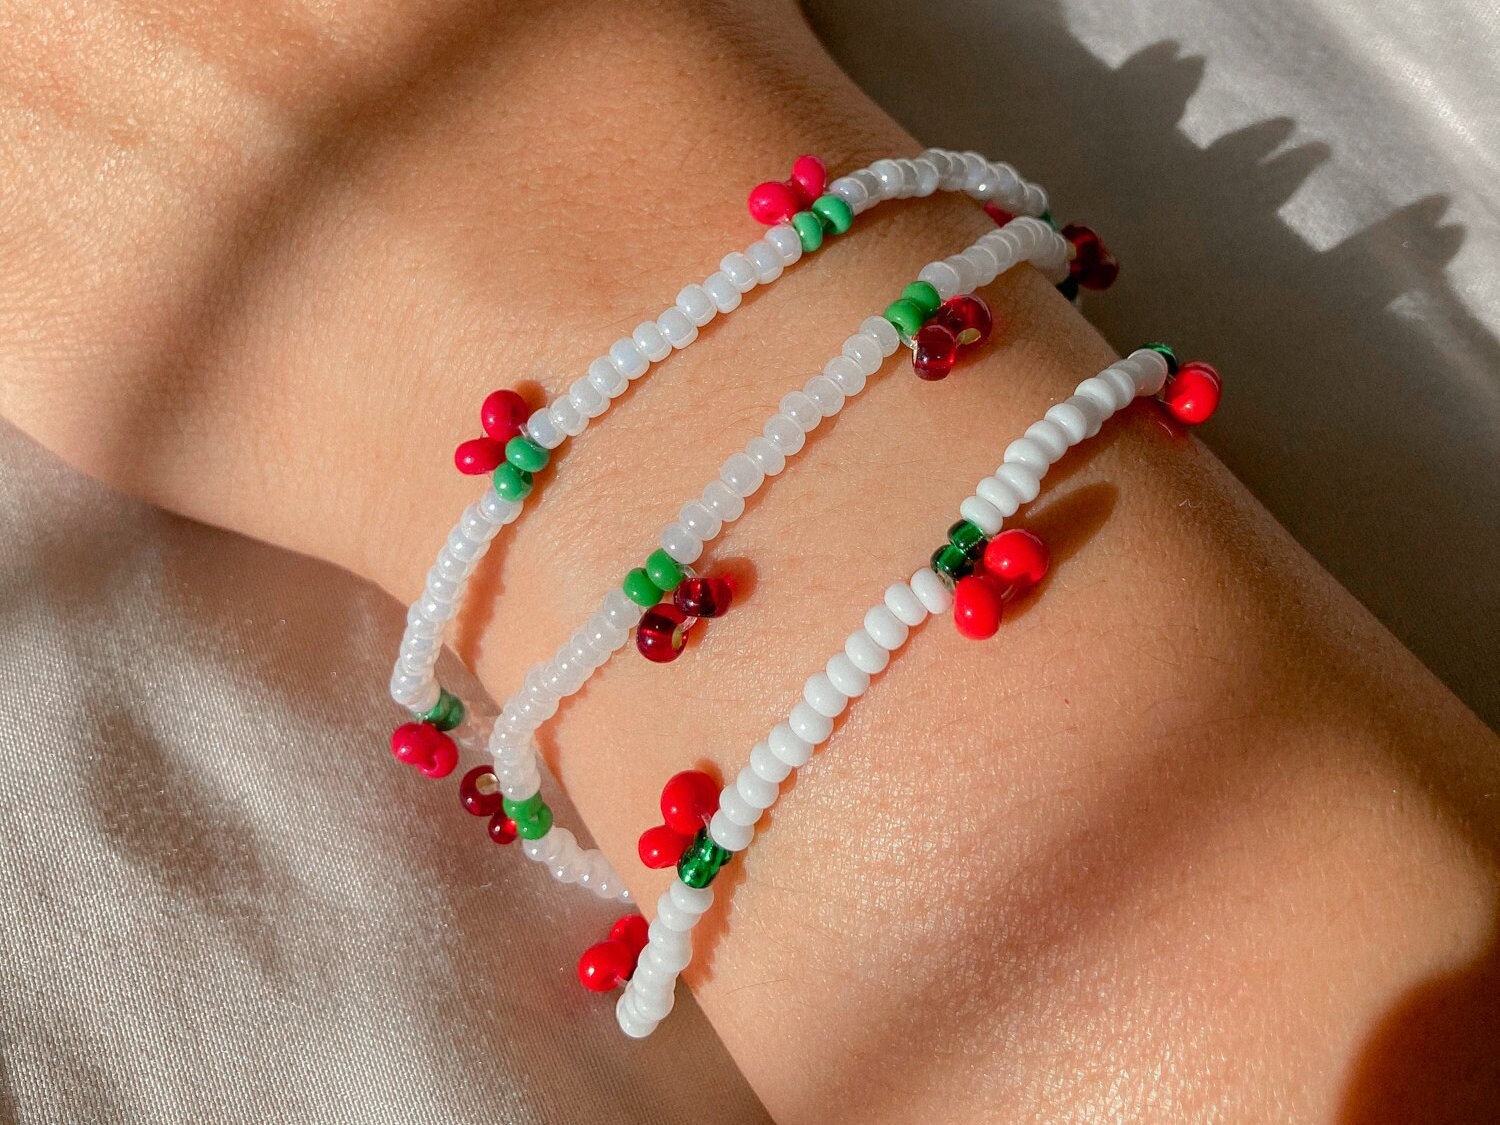 barbie movie inspired beads and charm bracelet aesthetic set of 2 bracelets  for girls and women charm bracelets thread braided bracelet set